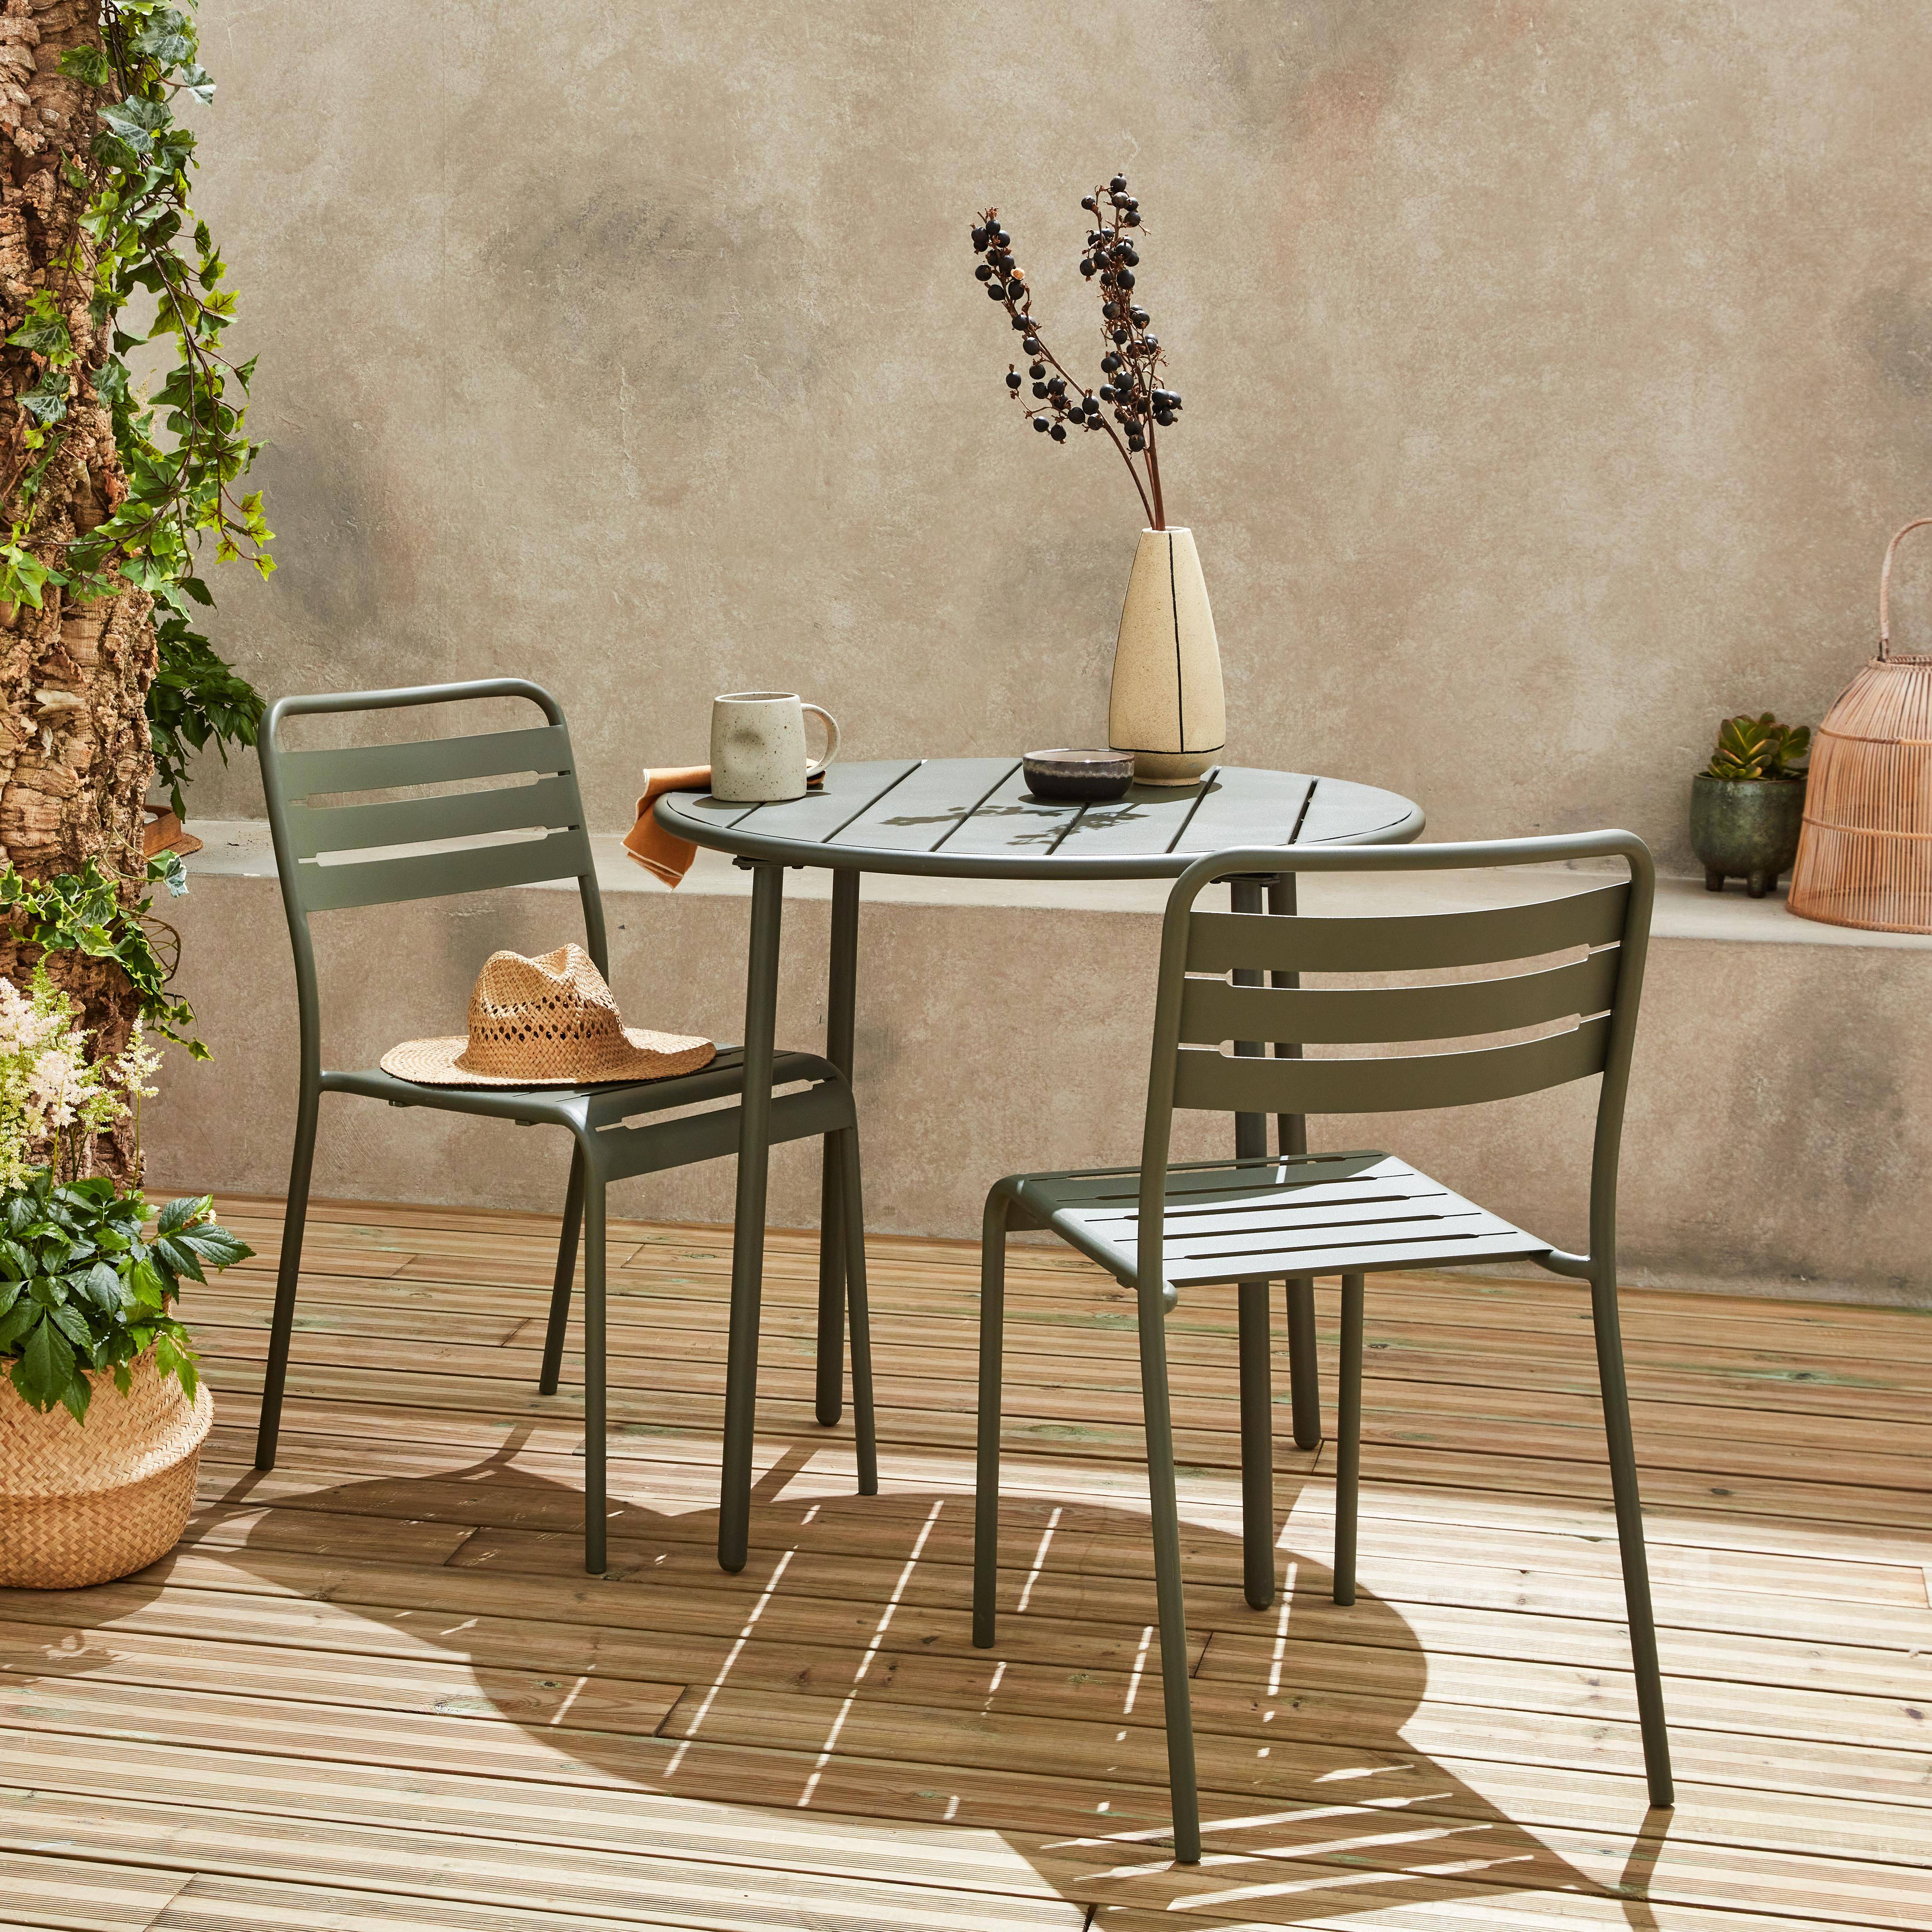 Amélia savane metalen tuintafel met 2 stoelen, roestbestendige afwerking,sweeek,Photo1